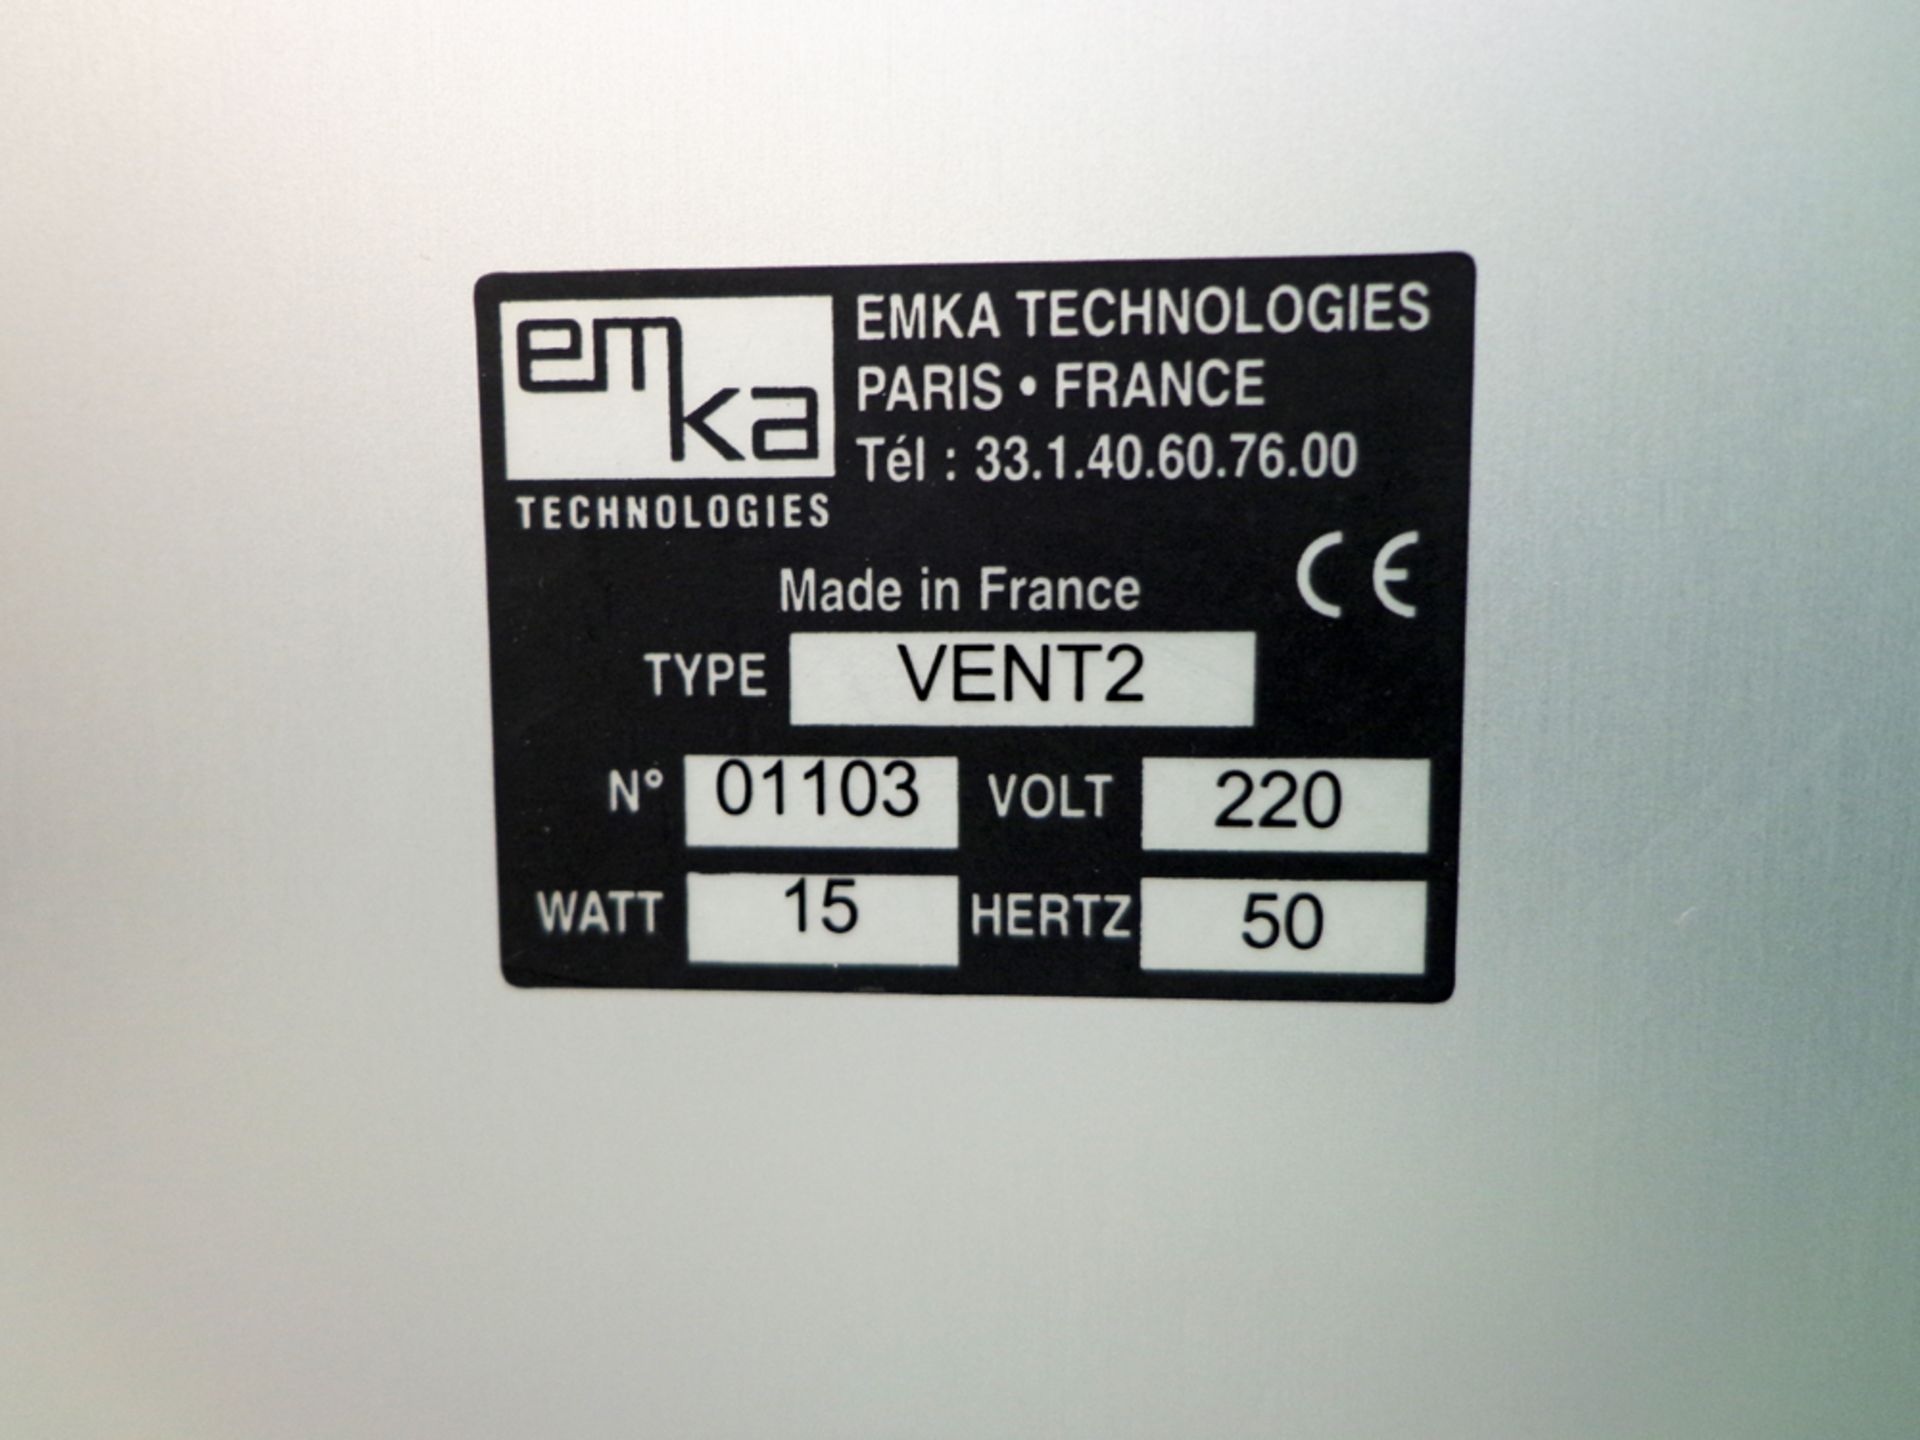 EMKA Technologies Ventilator Vent2, S/N 01103 - Image 4 of 4